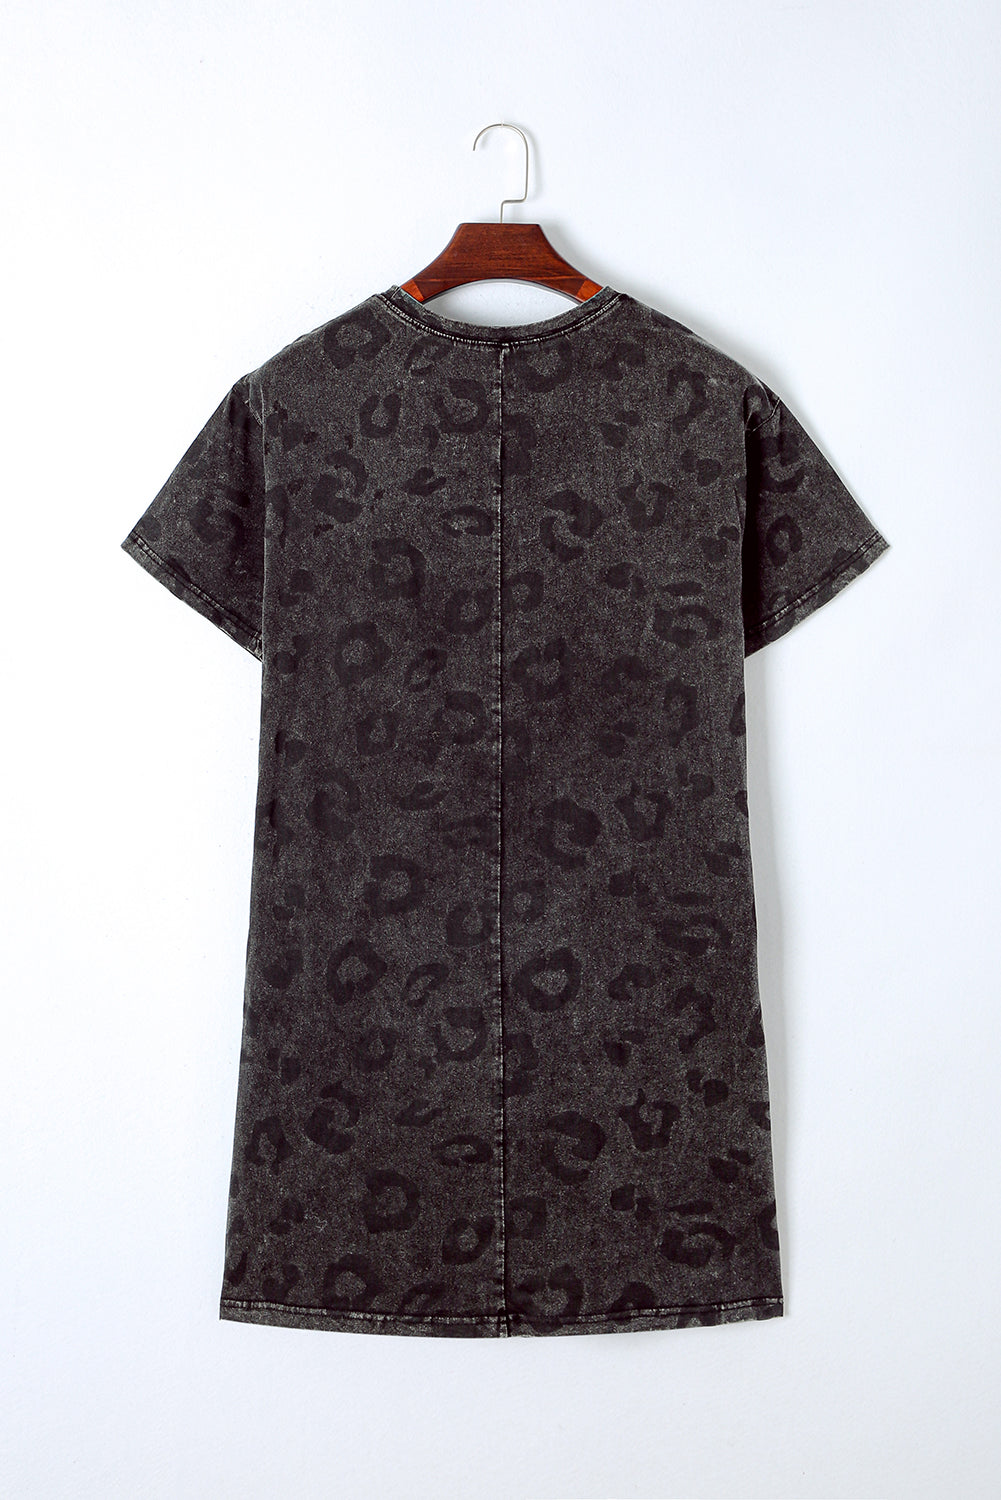 Robe t-shirt léopard grise